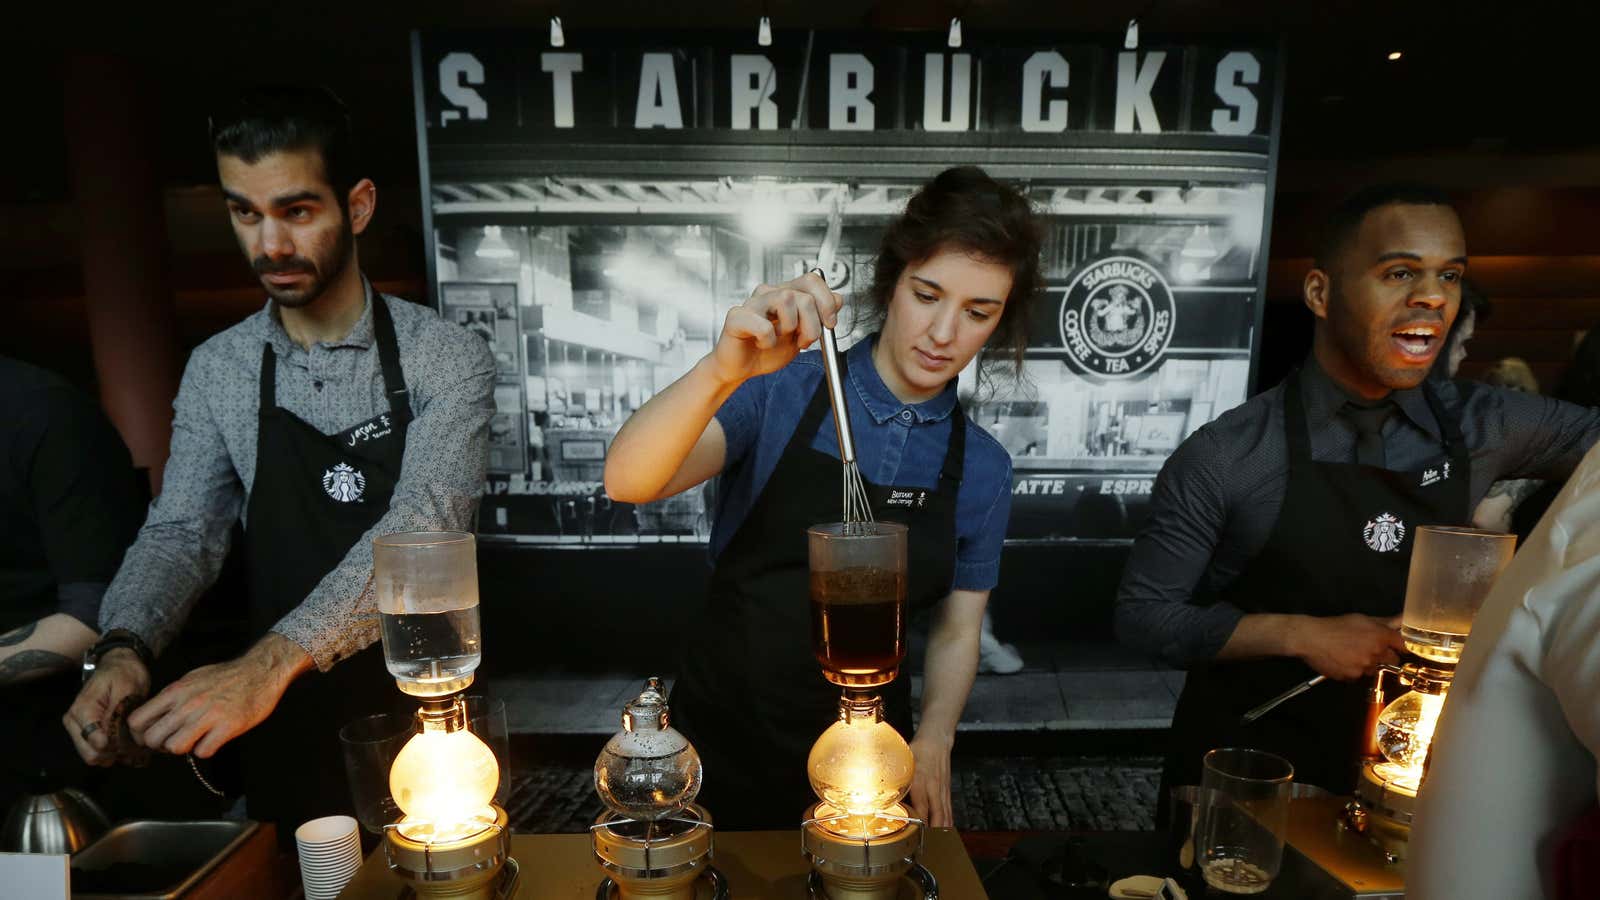 Starbucks: Pumpkin spiced unequal benefits.